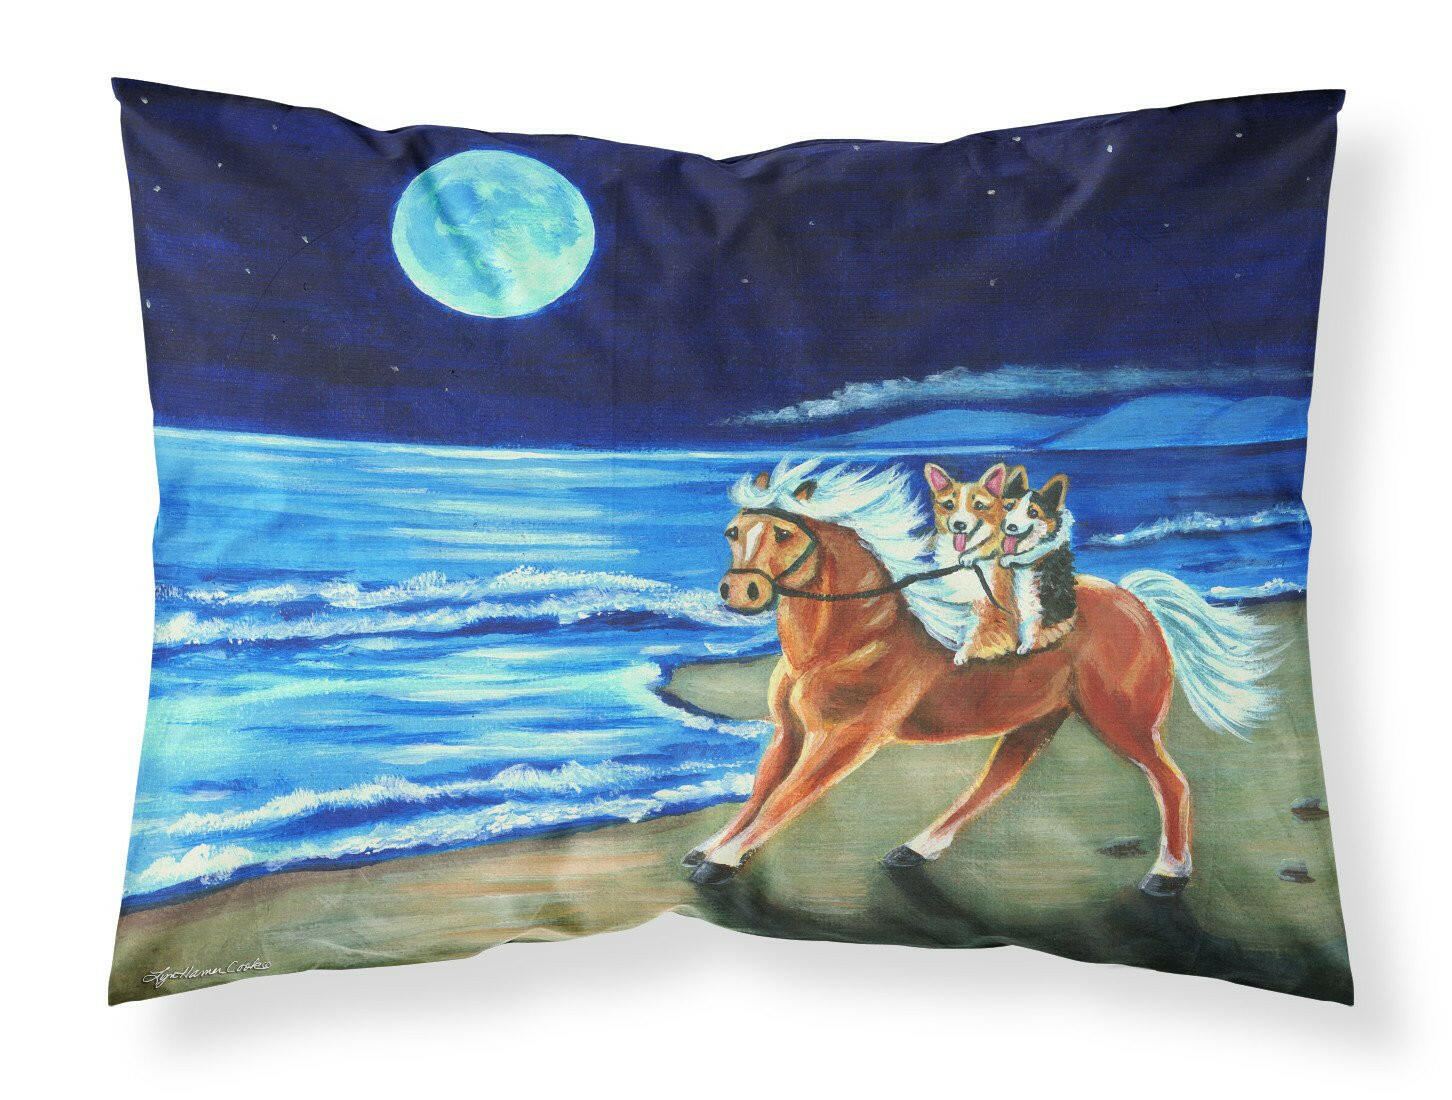 Corgi Beach Ride on Horse Fabric Standard Pillowcase 7318PILLOWCASE by Caroline's Treasures